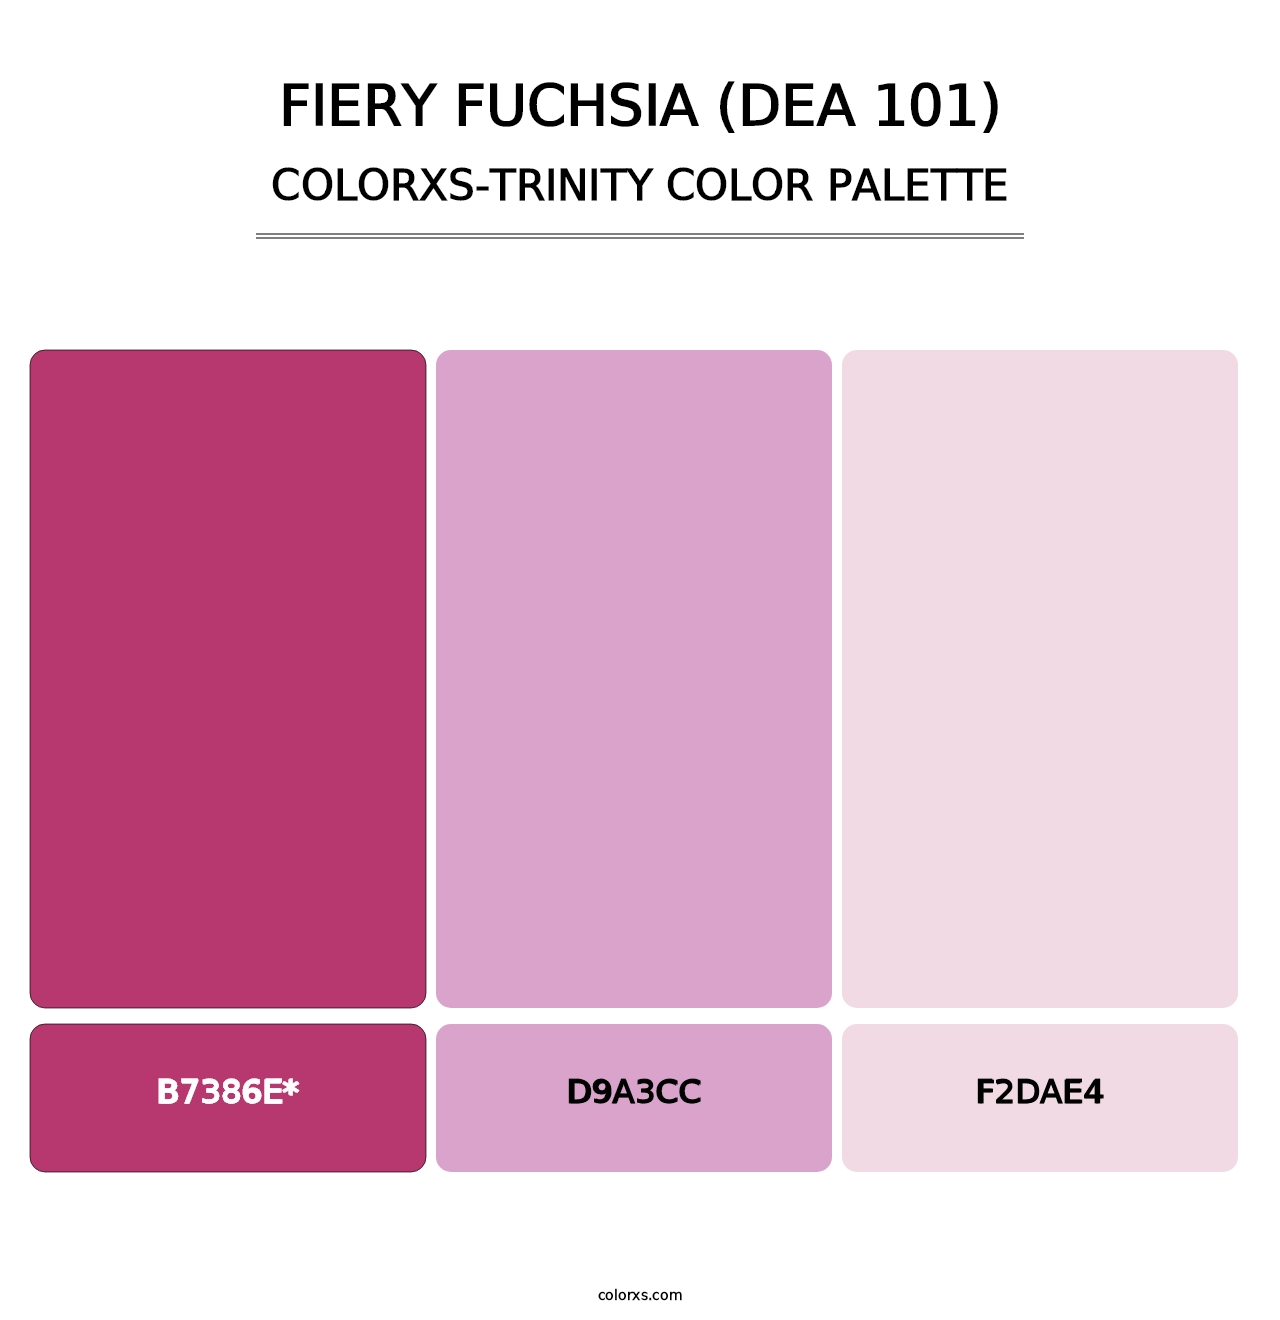 Fiery Fuchsia (DEA 101) - Colorxs Trinity Palette